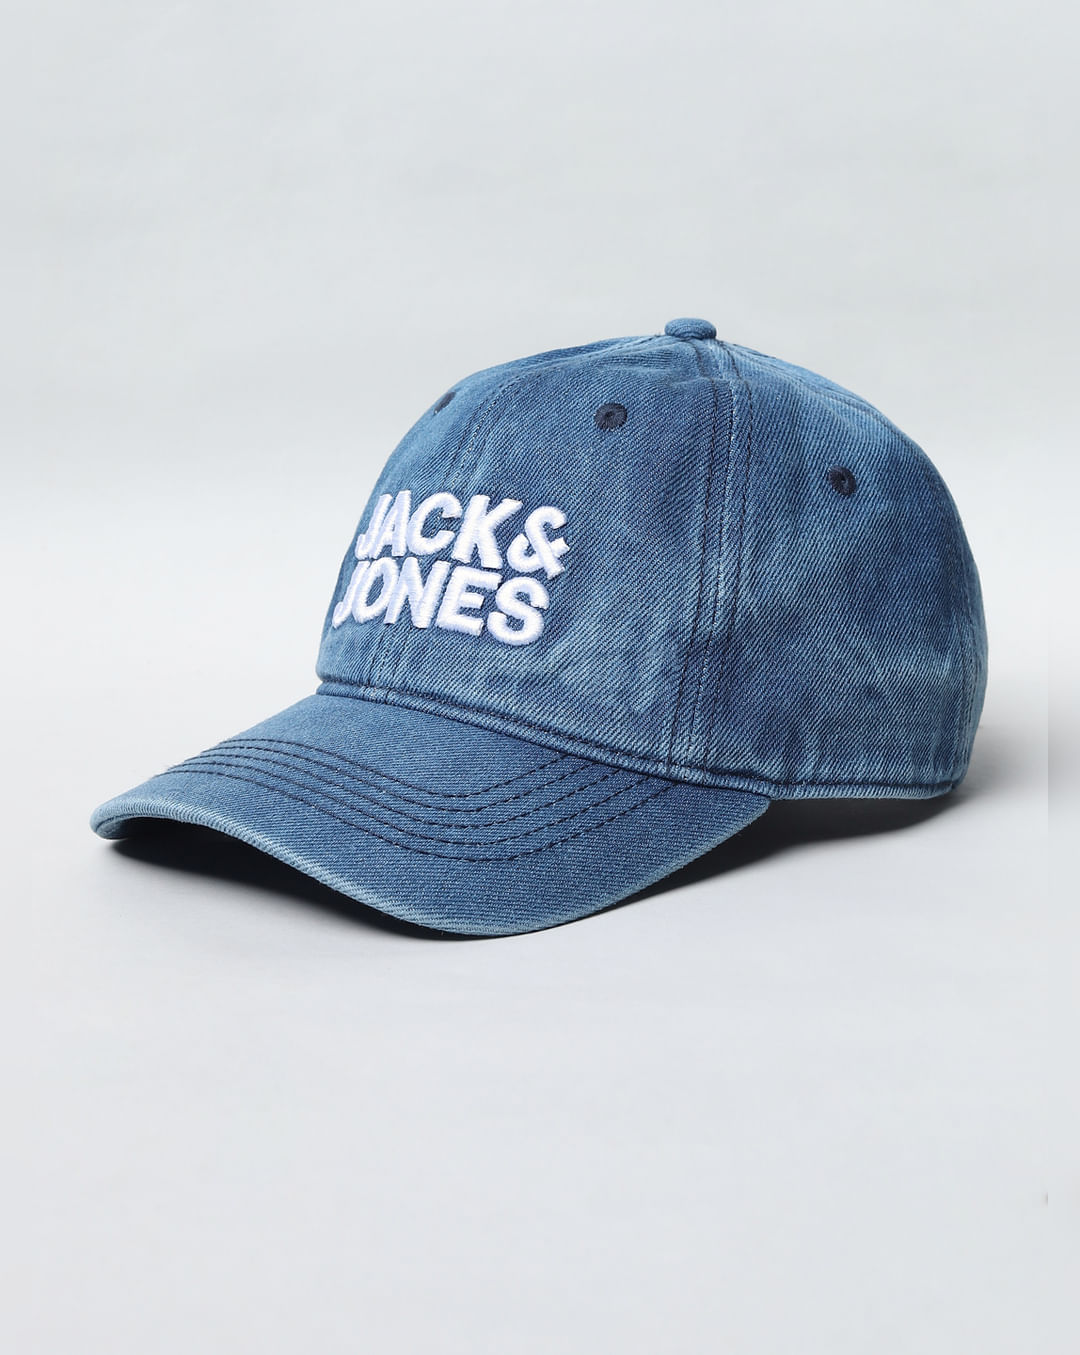 JACK&JONES Blue Denim Baseball Cap